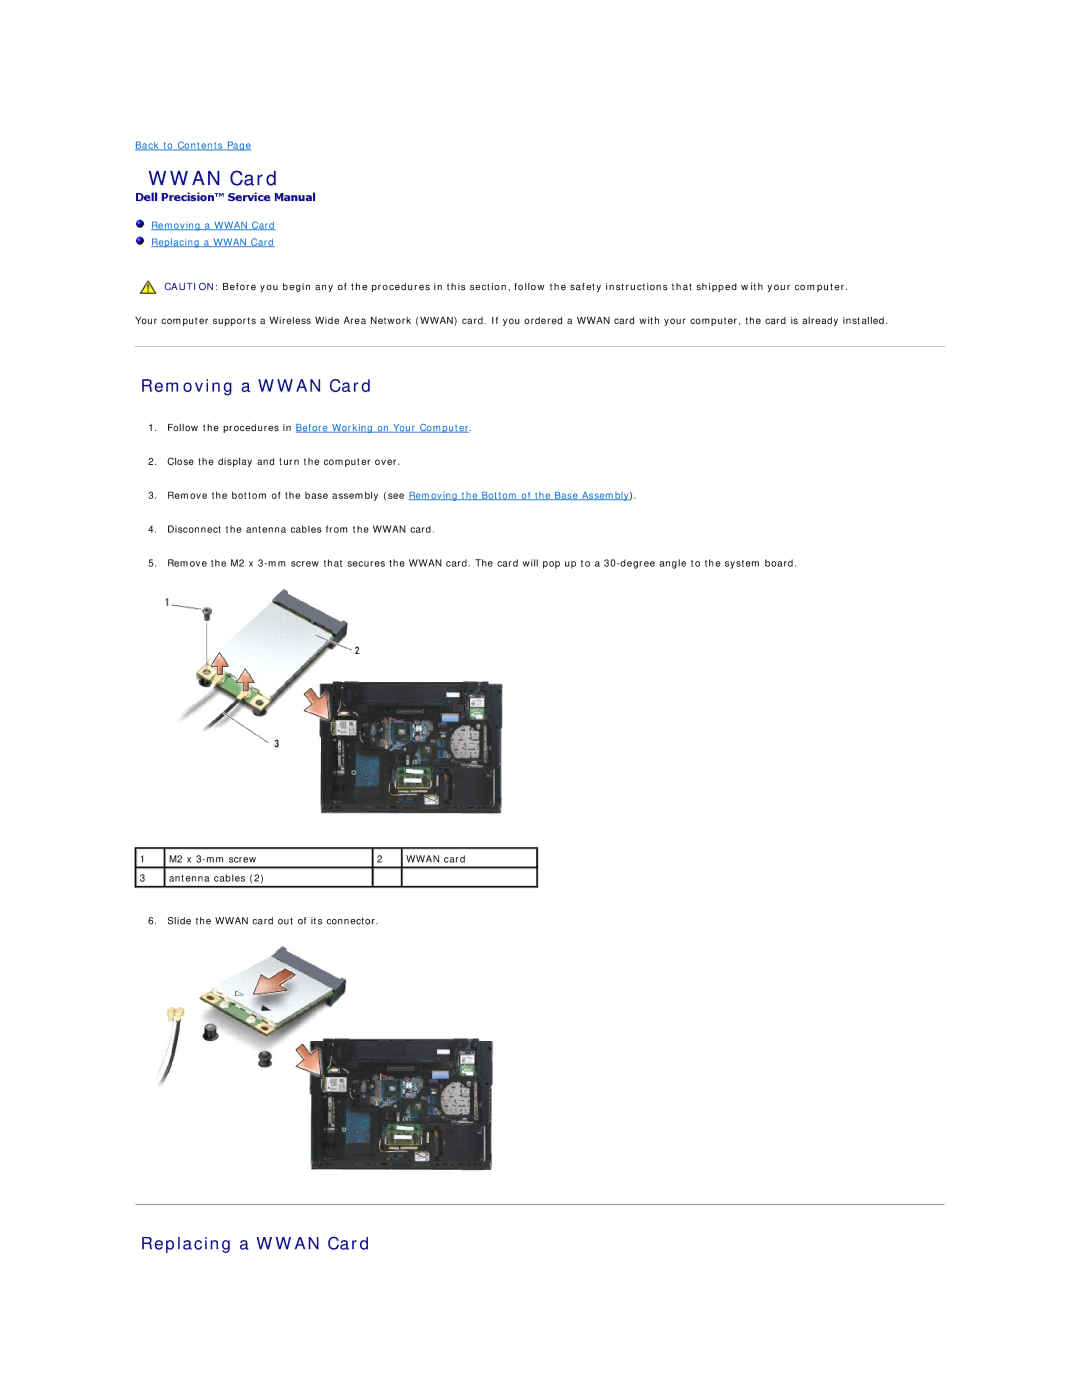 Dell PP30L manual Removing a Wwan Card Replacing a Wwan Card 